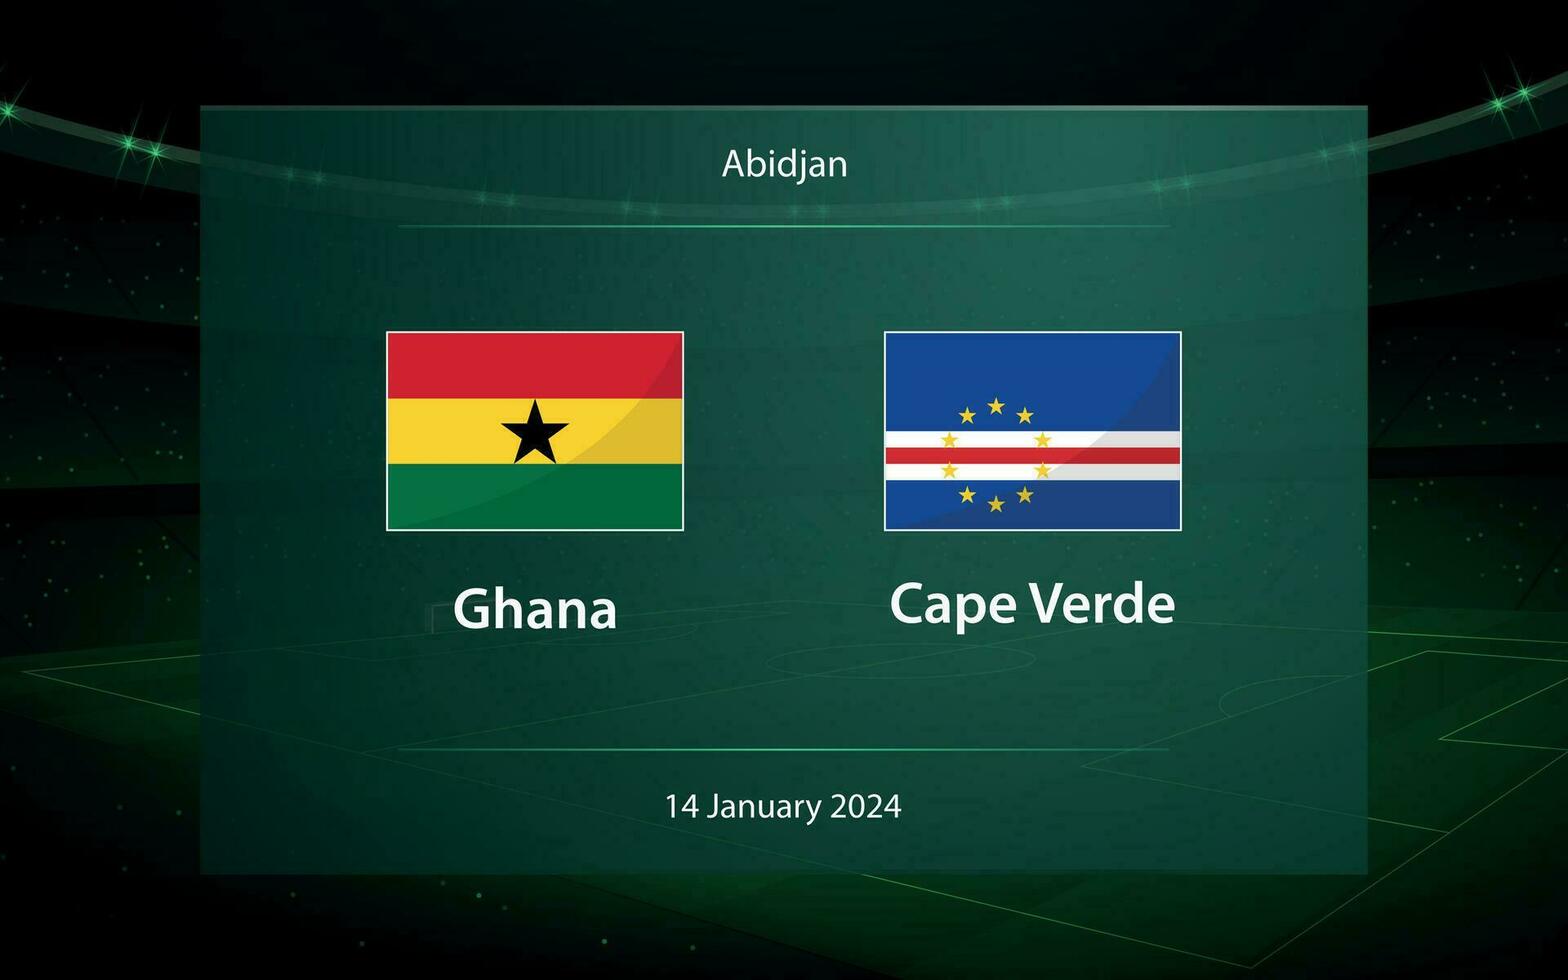 Ghana vs Cape Verde. Football scoreboard broadcast graphic vector